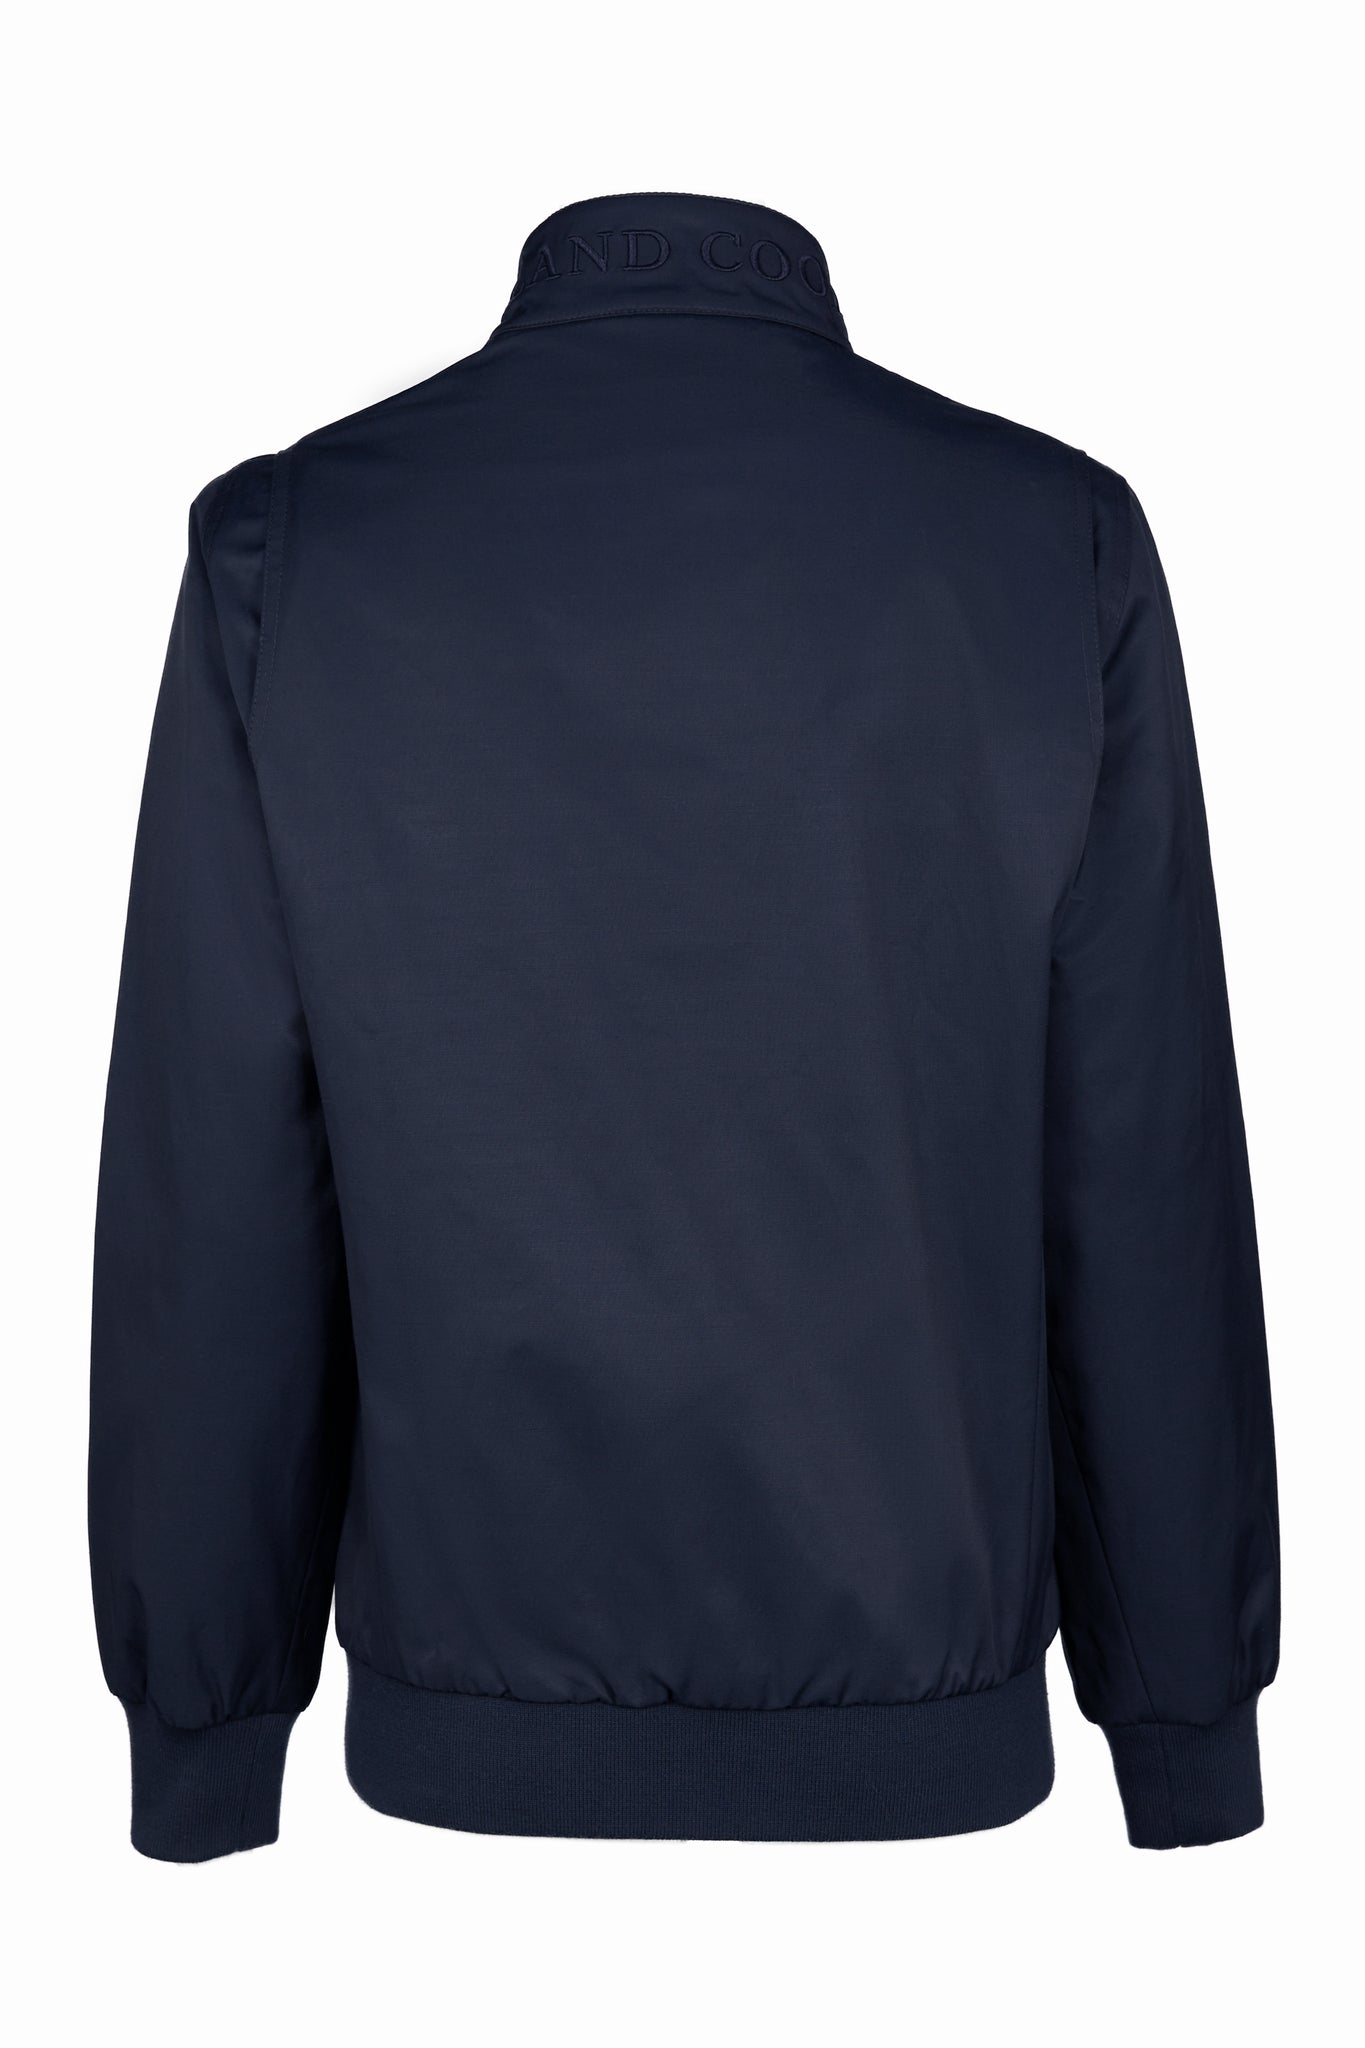 Harrington Jacket (Ink Navy) – Holland Cooper ®